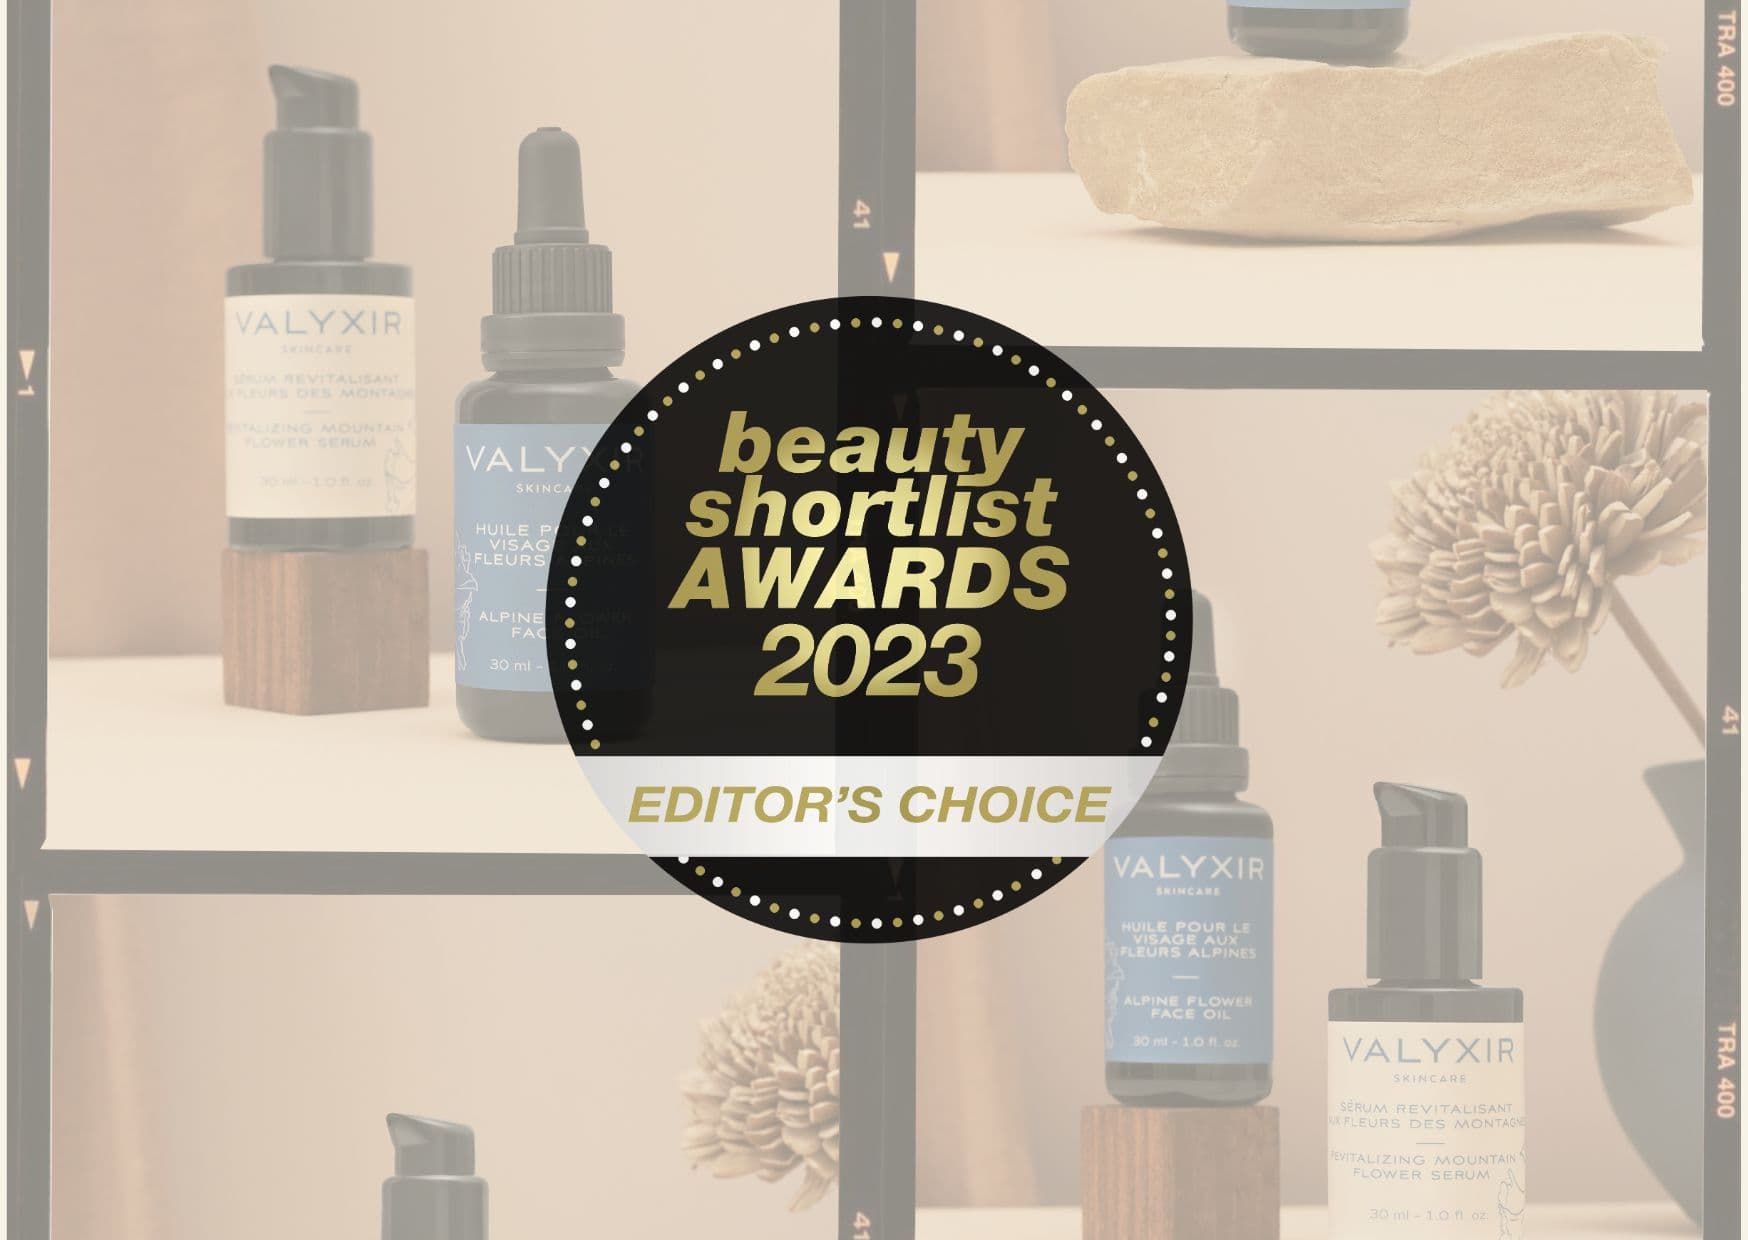 2023 BEAUTY SHORTLIST AWARDS - Beauty EDITOR’S CHOICE